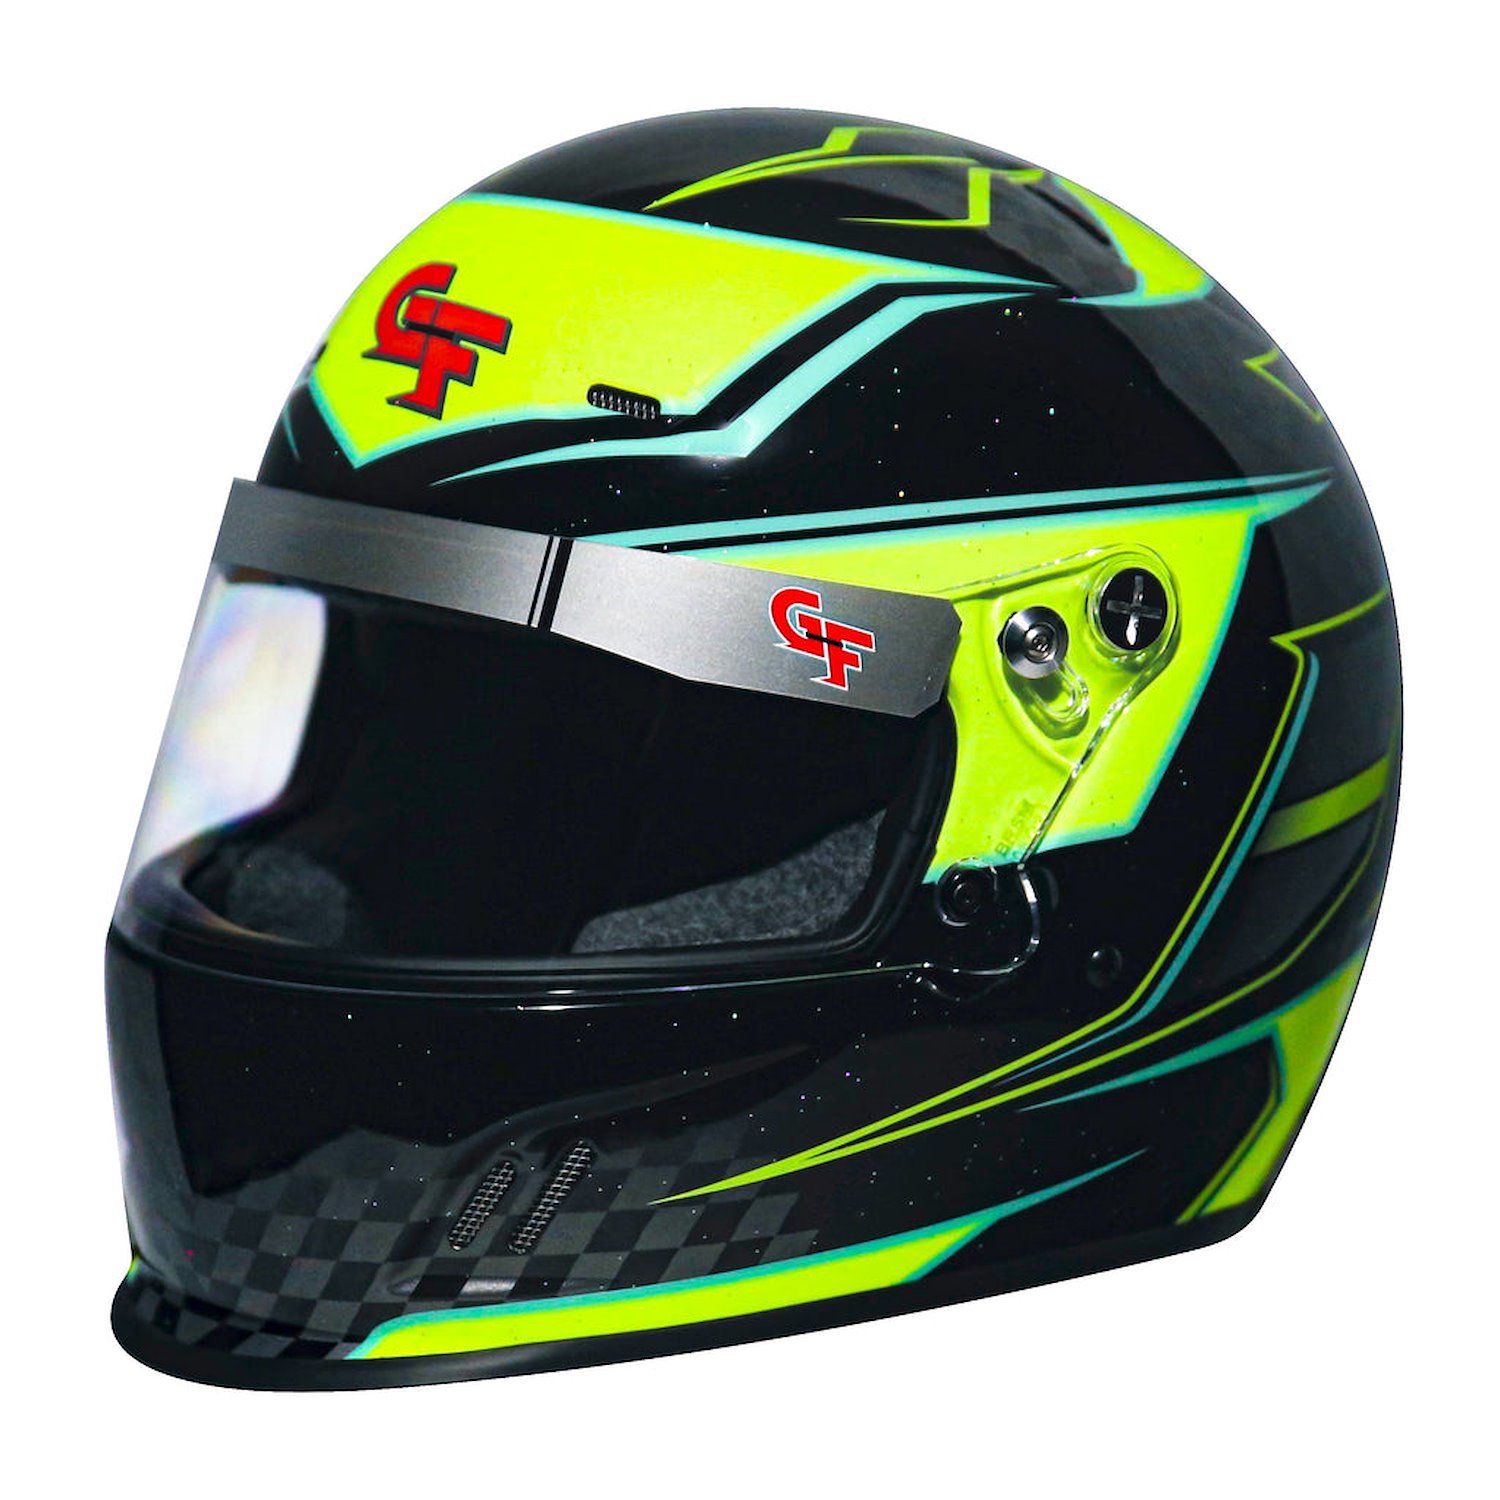 13402MEDYL Helmet, CMR Graphics, Medium, Black/Yellow